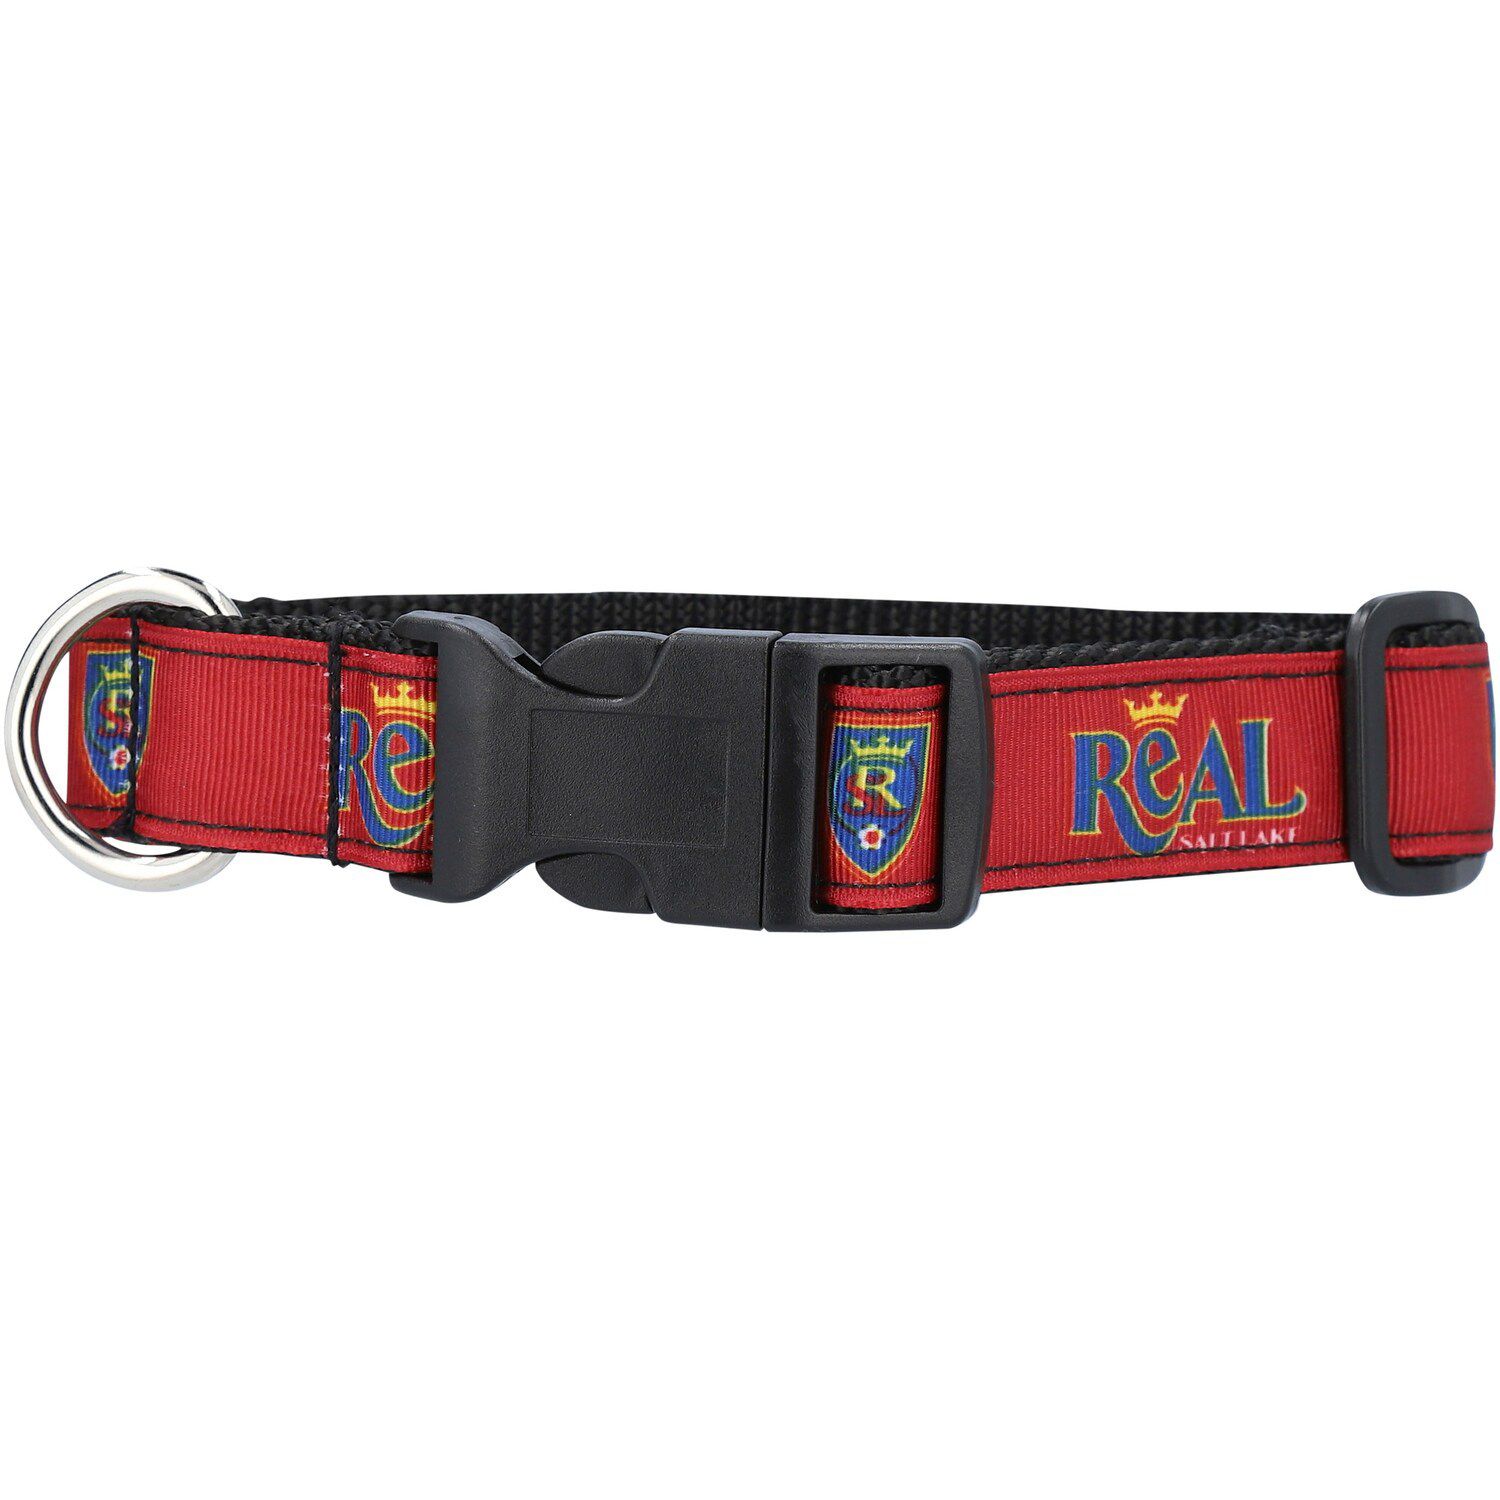 Image for Unbranded Real Salt Lake Dog Collar at Kohl's.